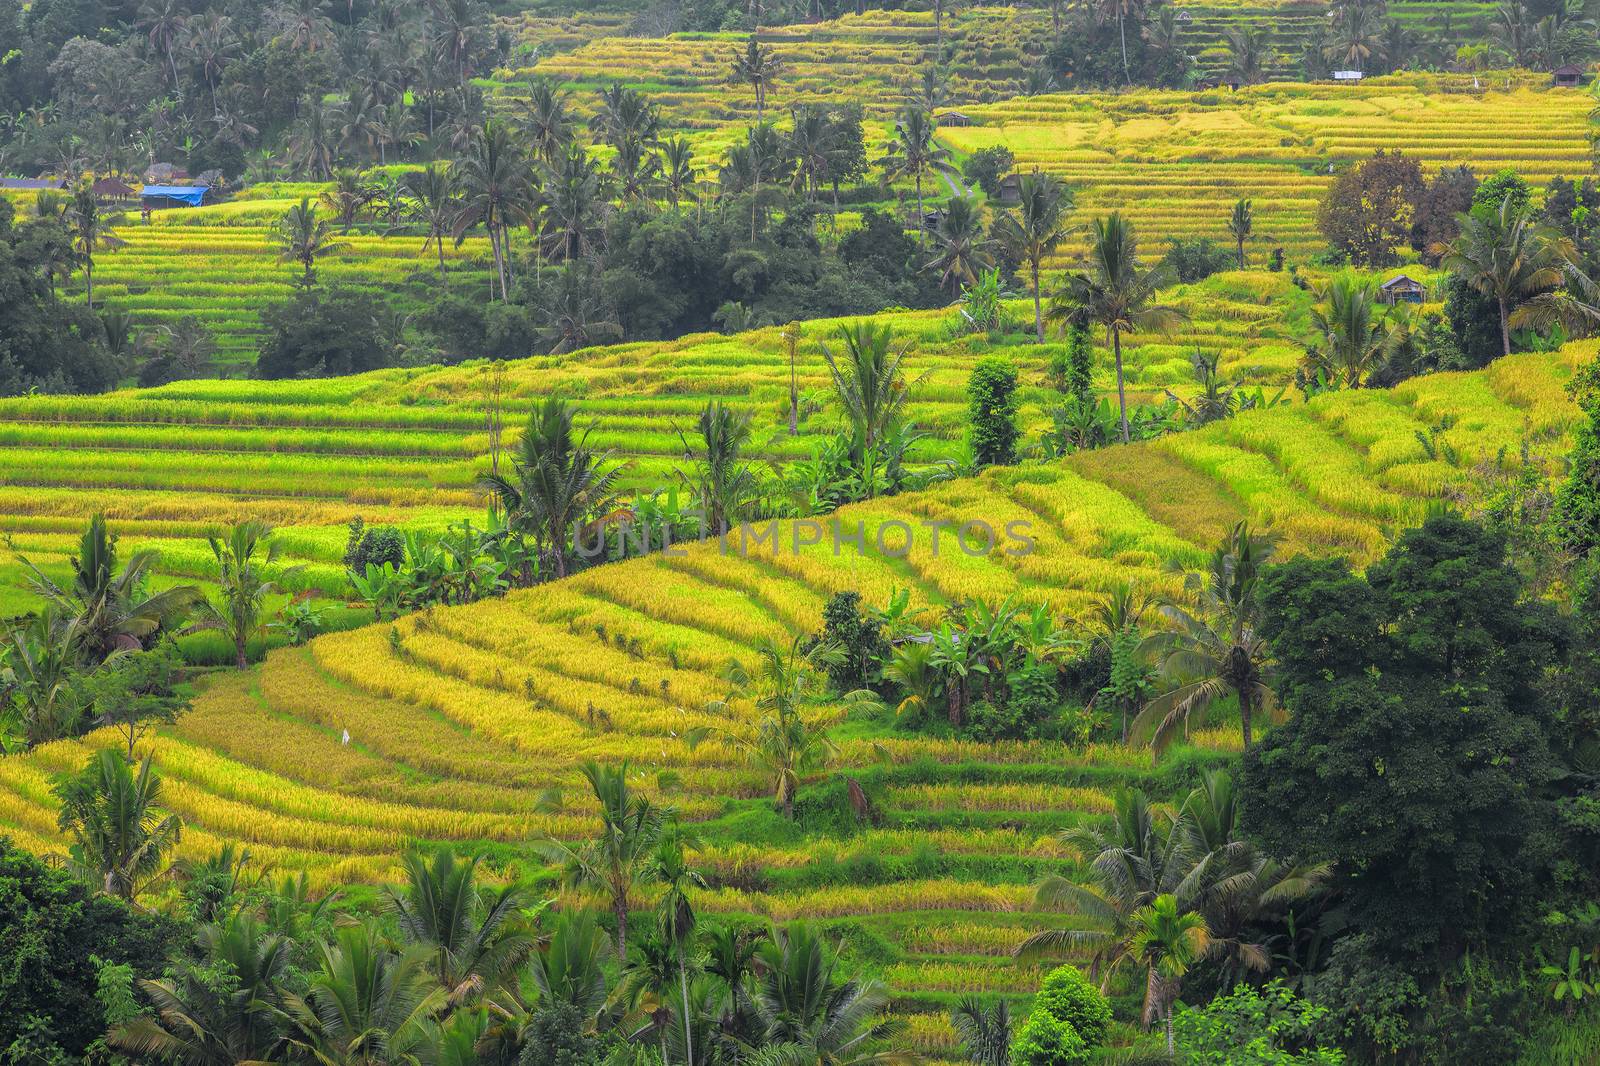 Beautiful rice terrace fields in Bali Indonesia